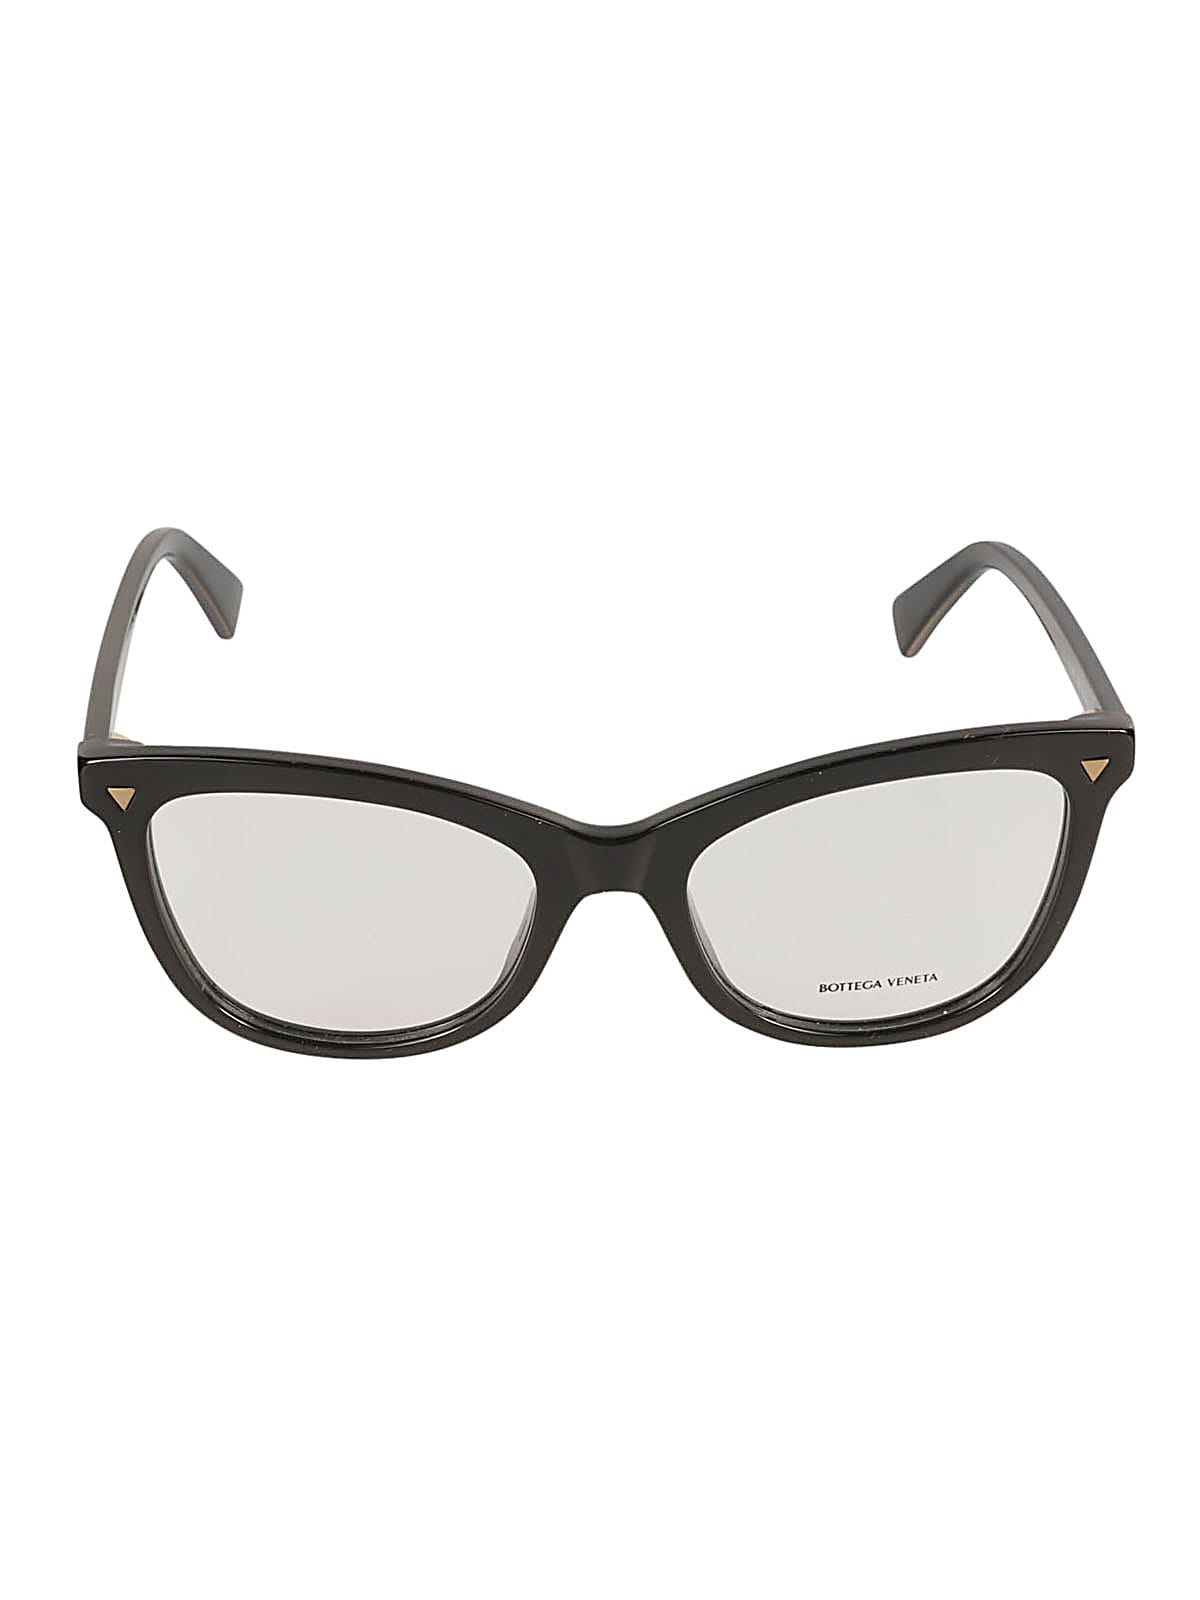 Bottega Veneta Eyewear Square Frame Glasses